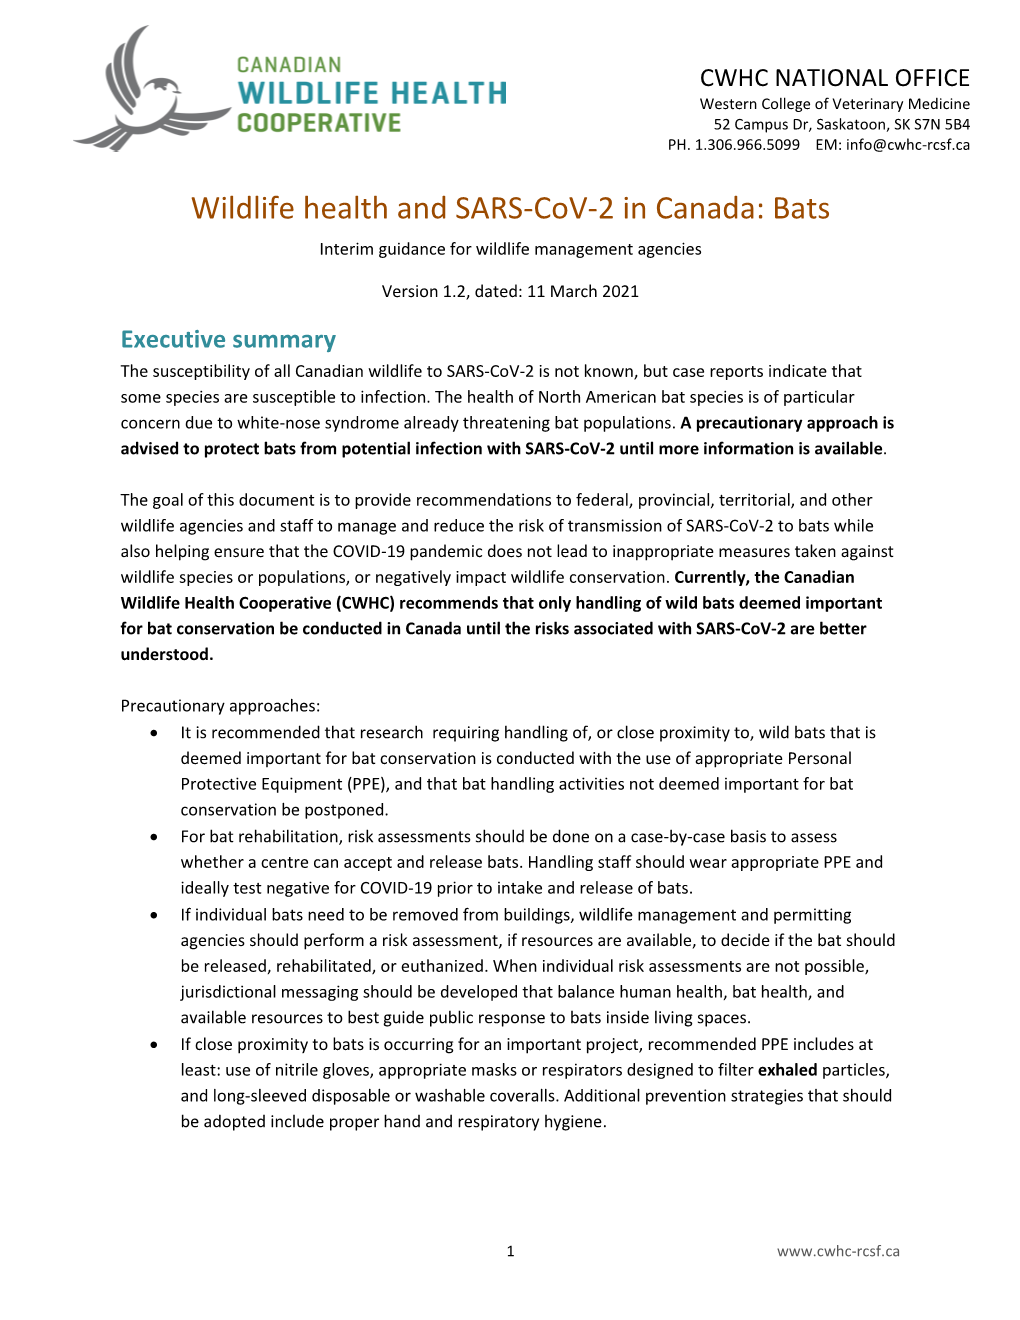 Bats Interim Guidance for Wildlife Management Agencies